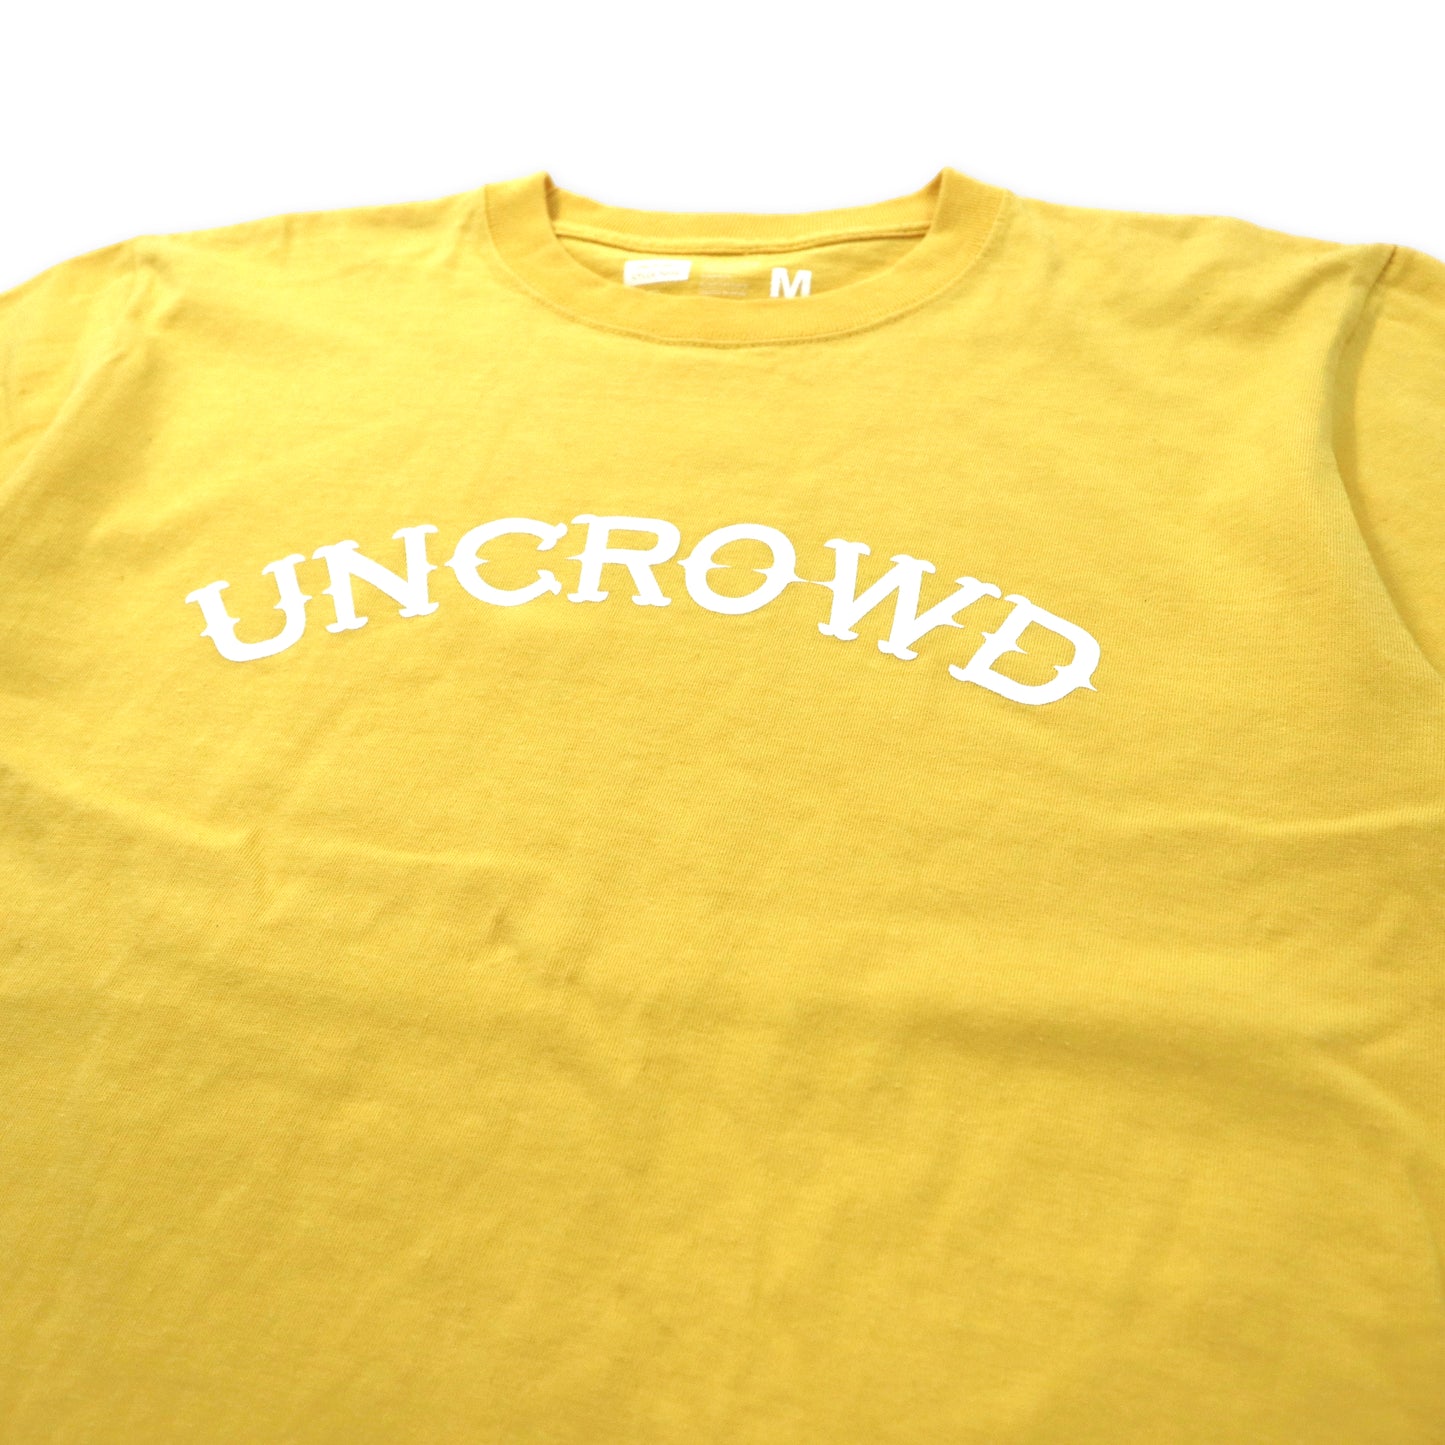 UNCROWD CYCLETOGS ロゴプリントTシャツ M イエロー コットン